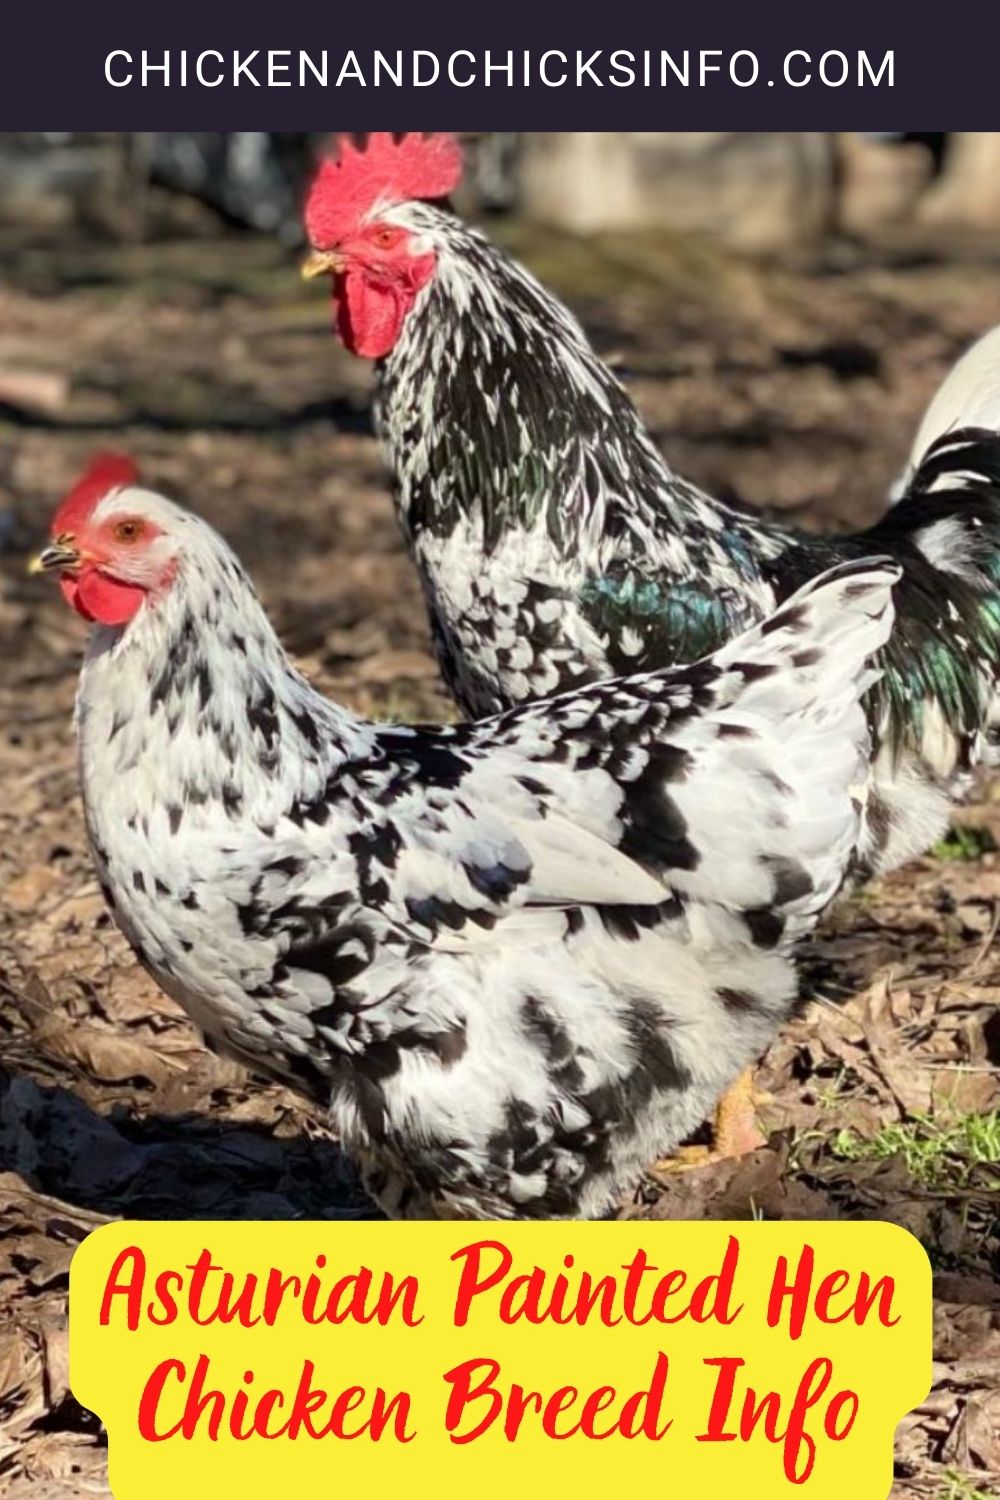 Asturian Painted Hen Chicken Breed Info pinterest image.